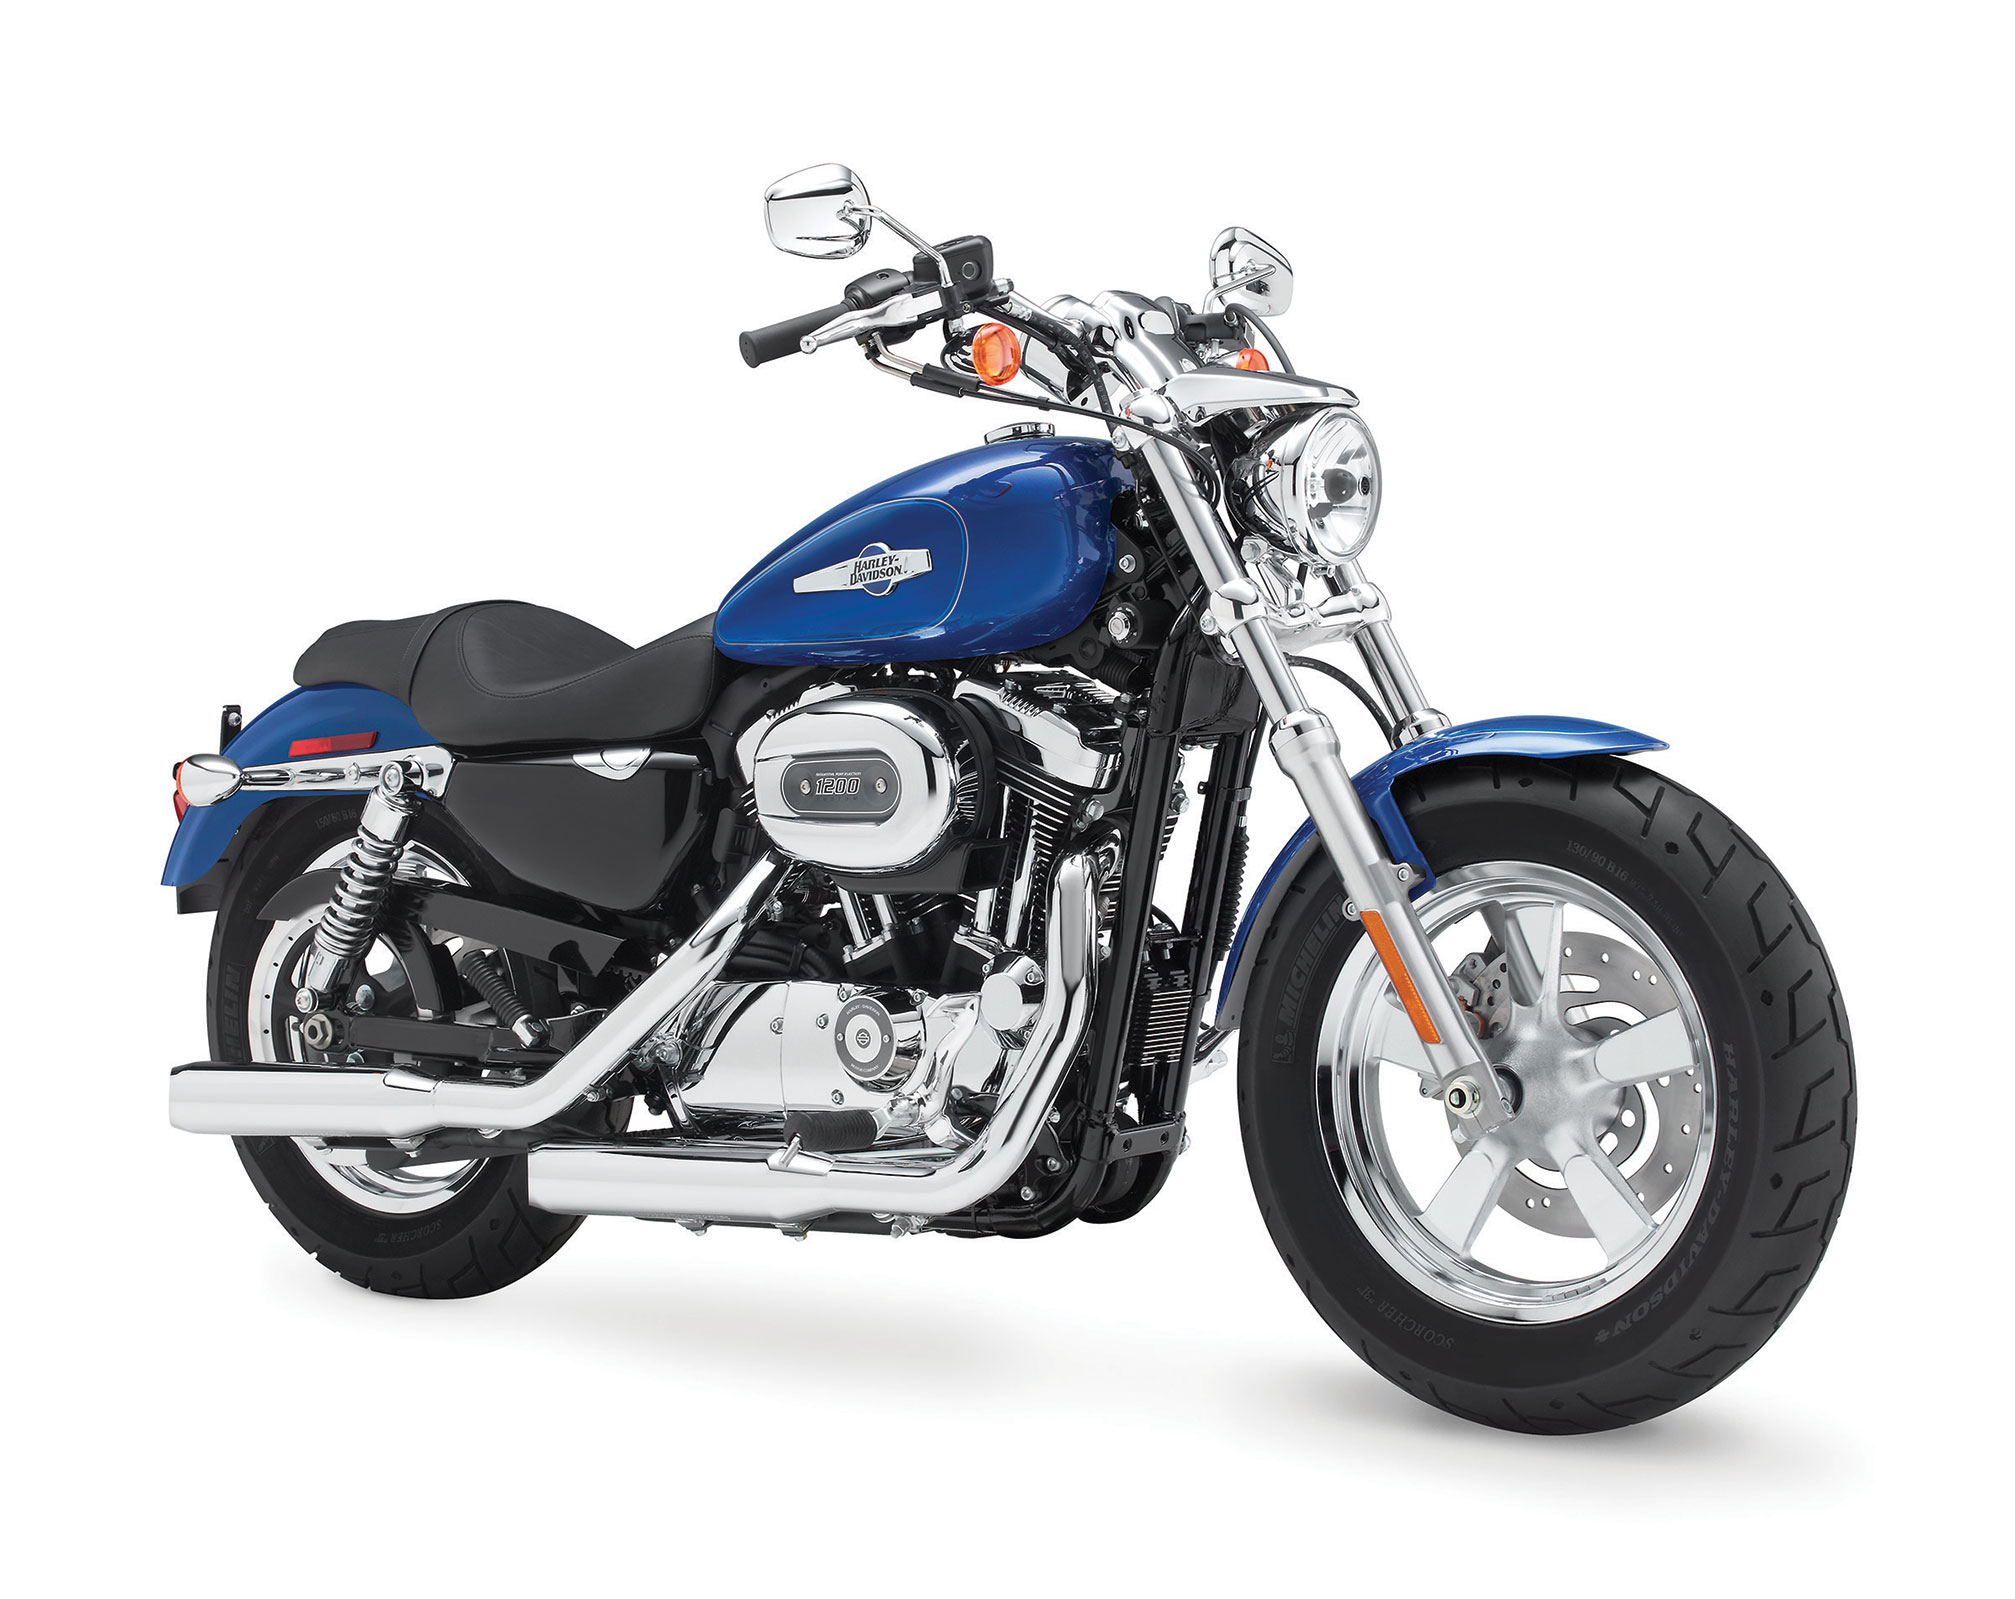 2015 Harley Davidson Xl1200c 1200 Custom Review